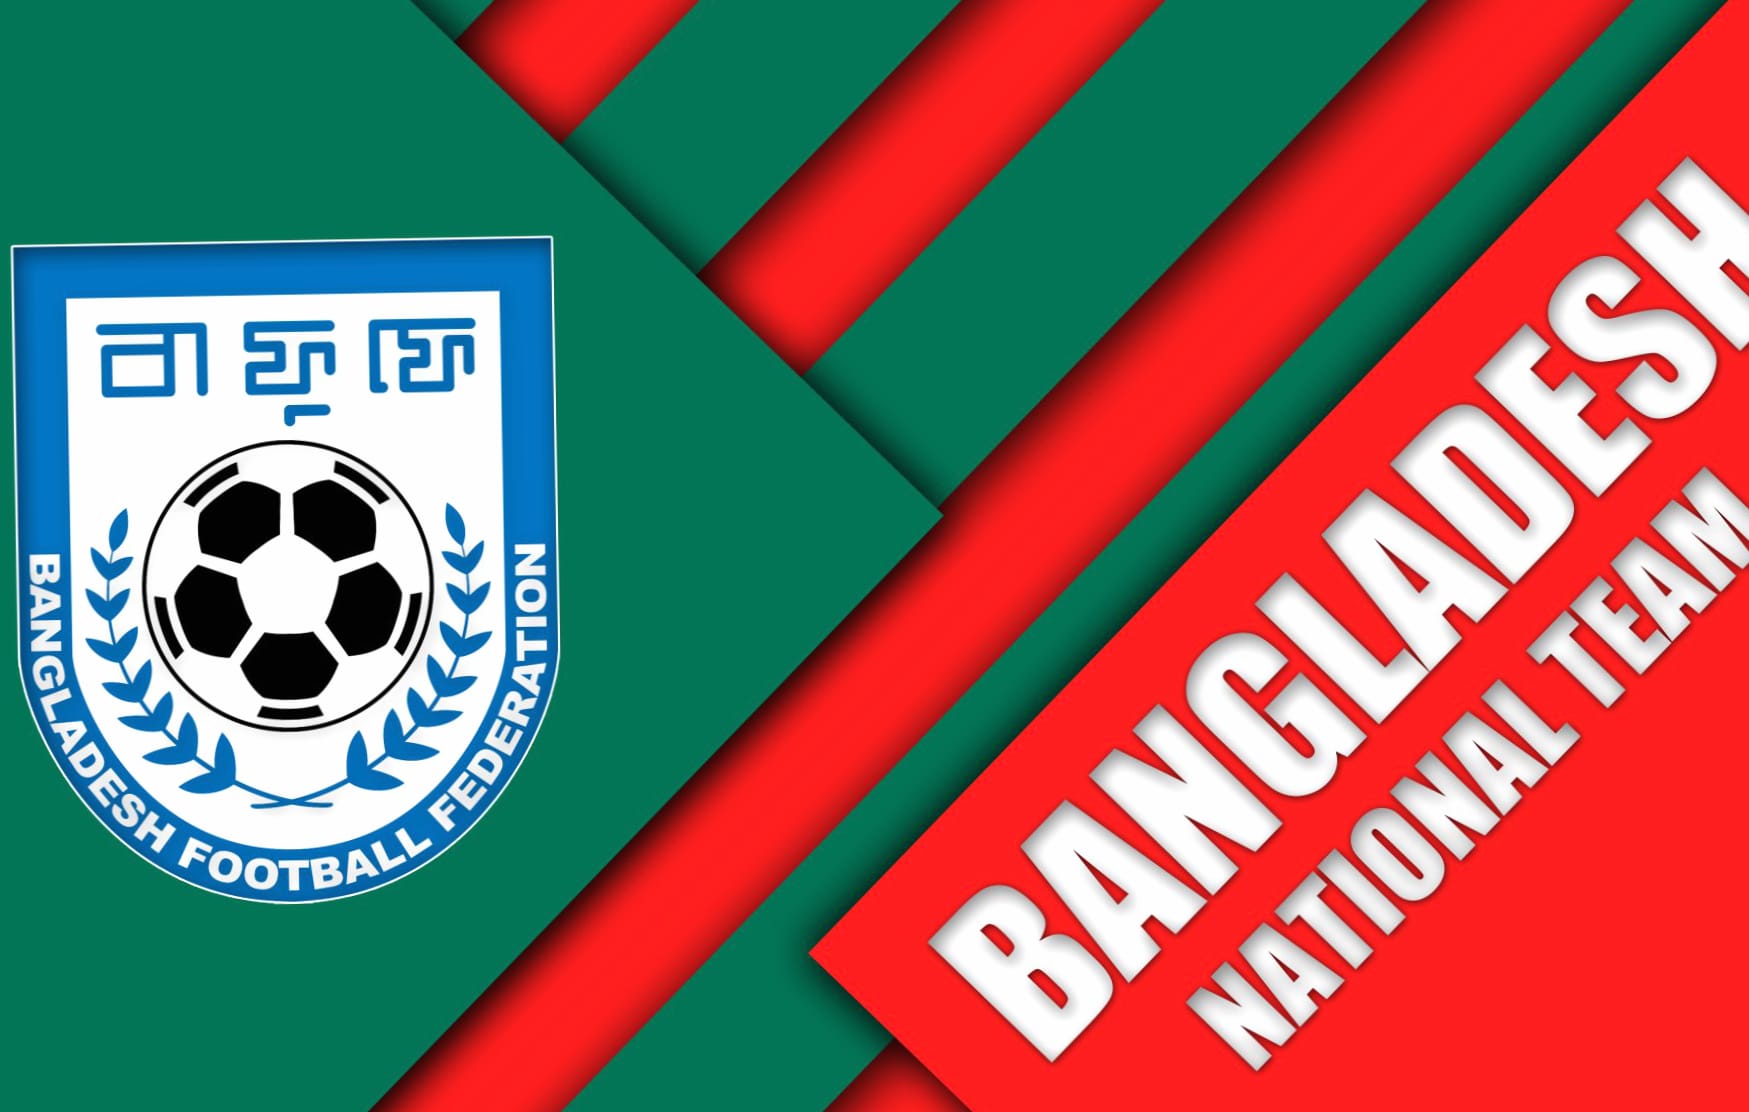 Bangladesh National Football Team at 1280 x 960 size wallpapers HD quality